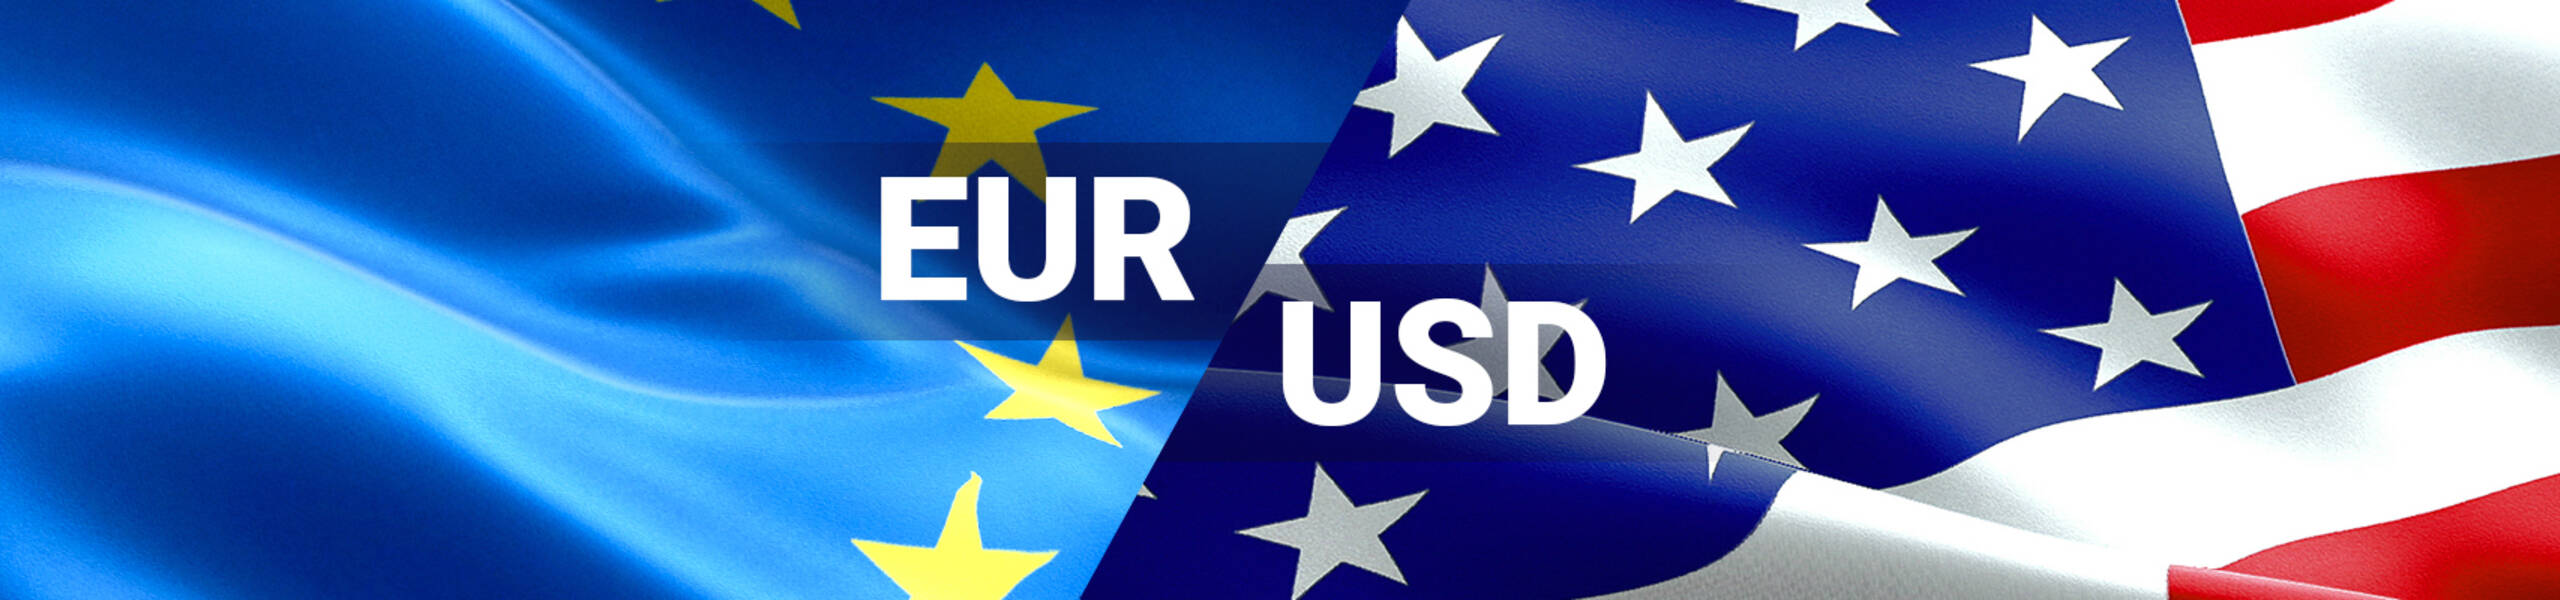 EUR/USD: euro entered into Cloud